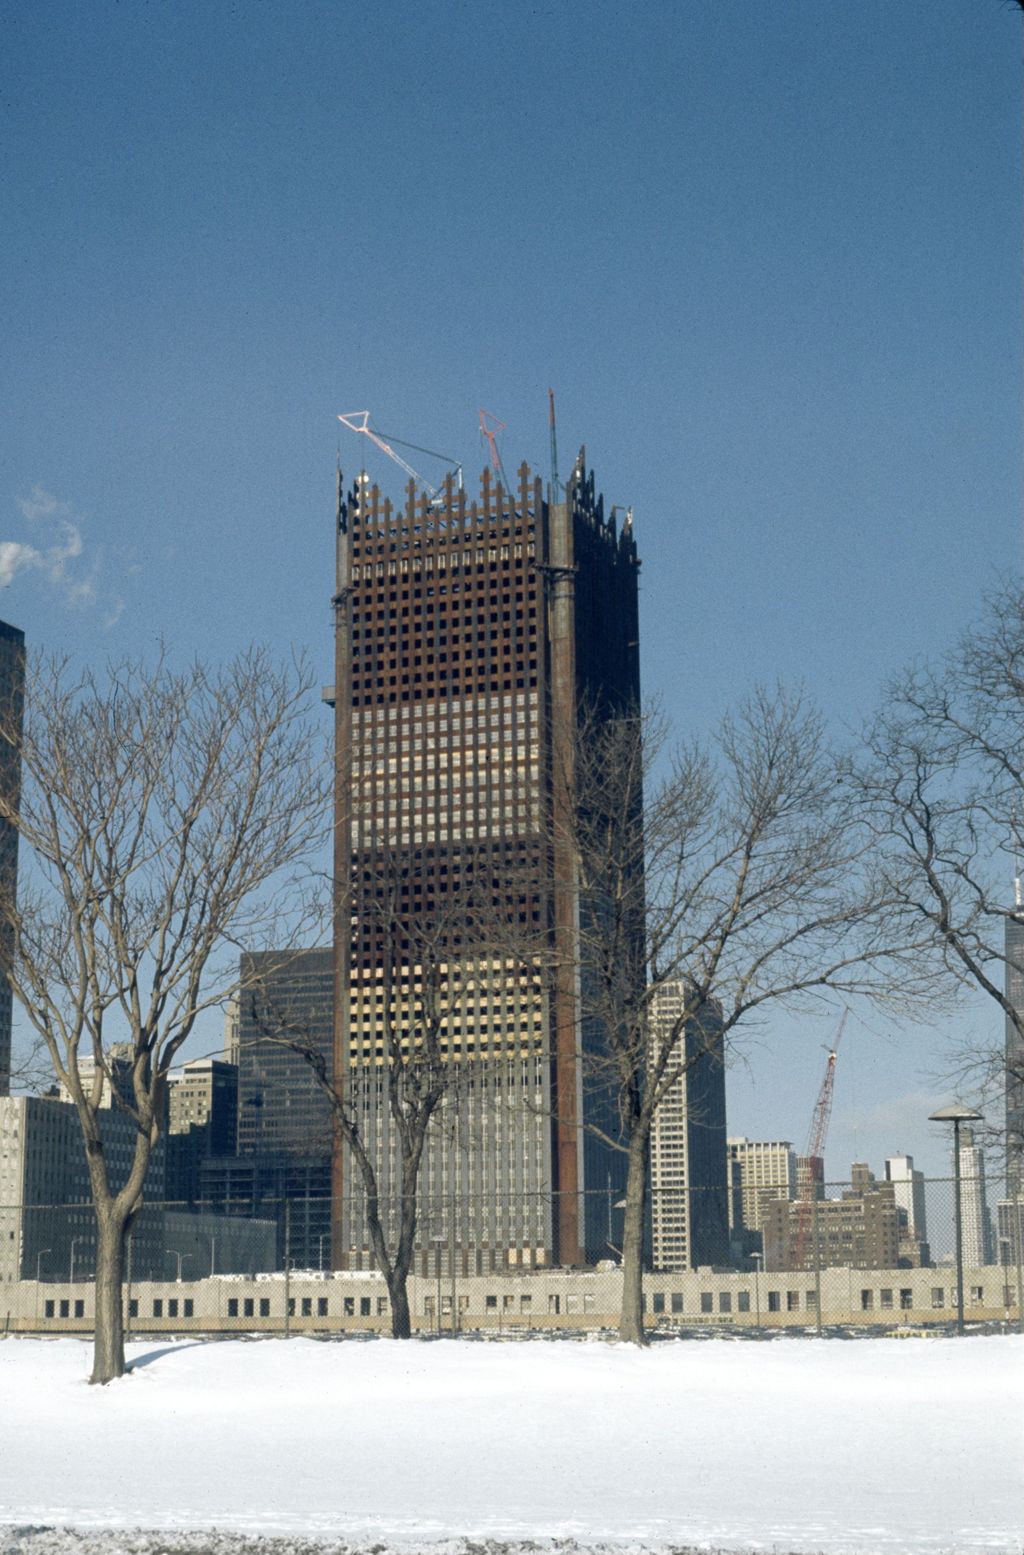 Miniature of Standard Oil Building under construction